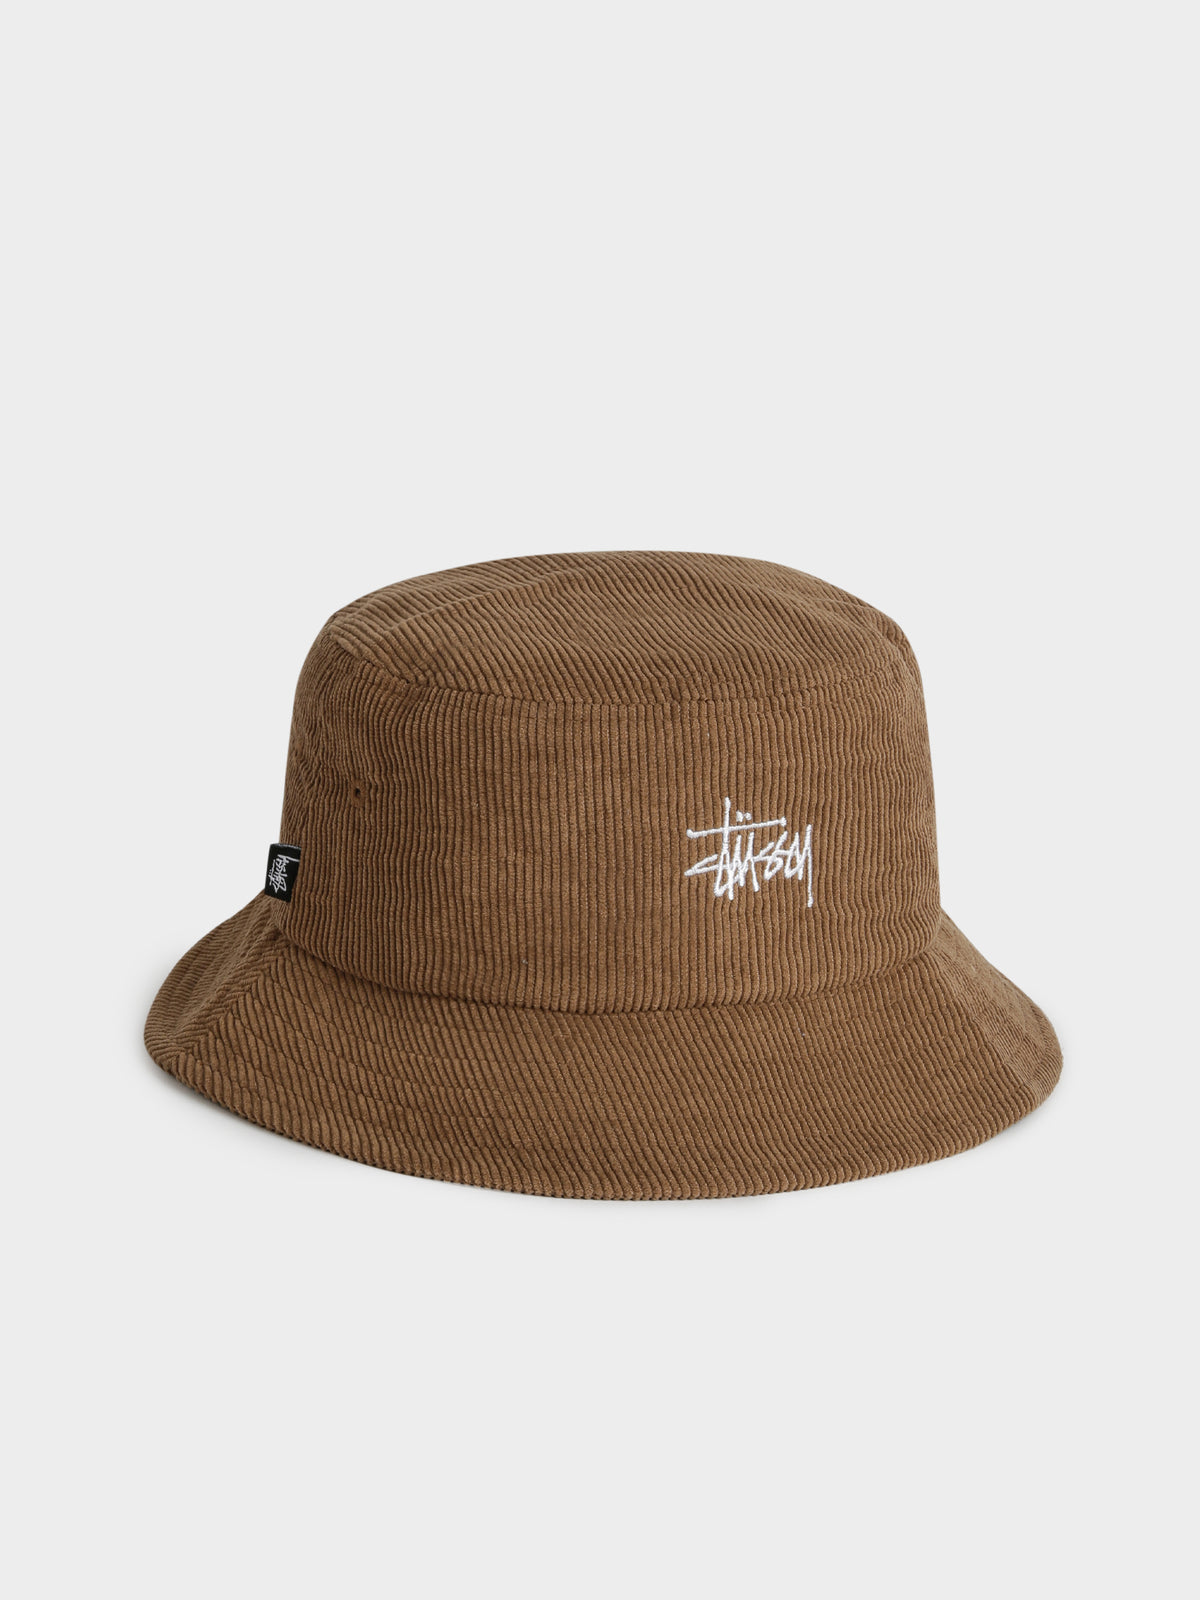 Graffiti Cord Bucket Hat in Brown